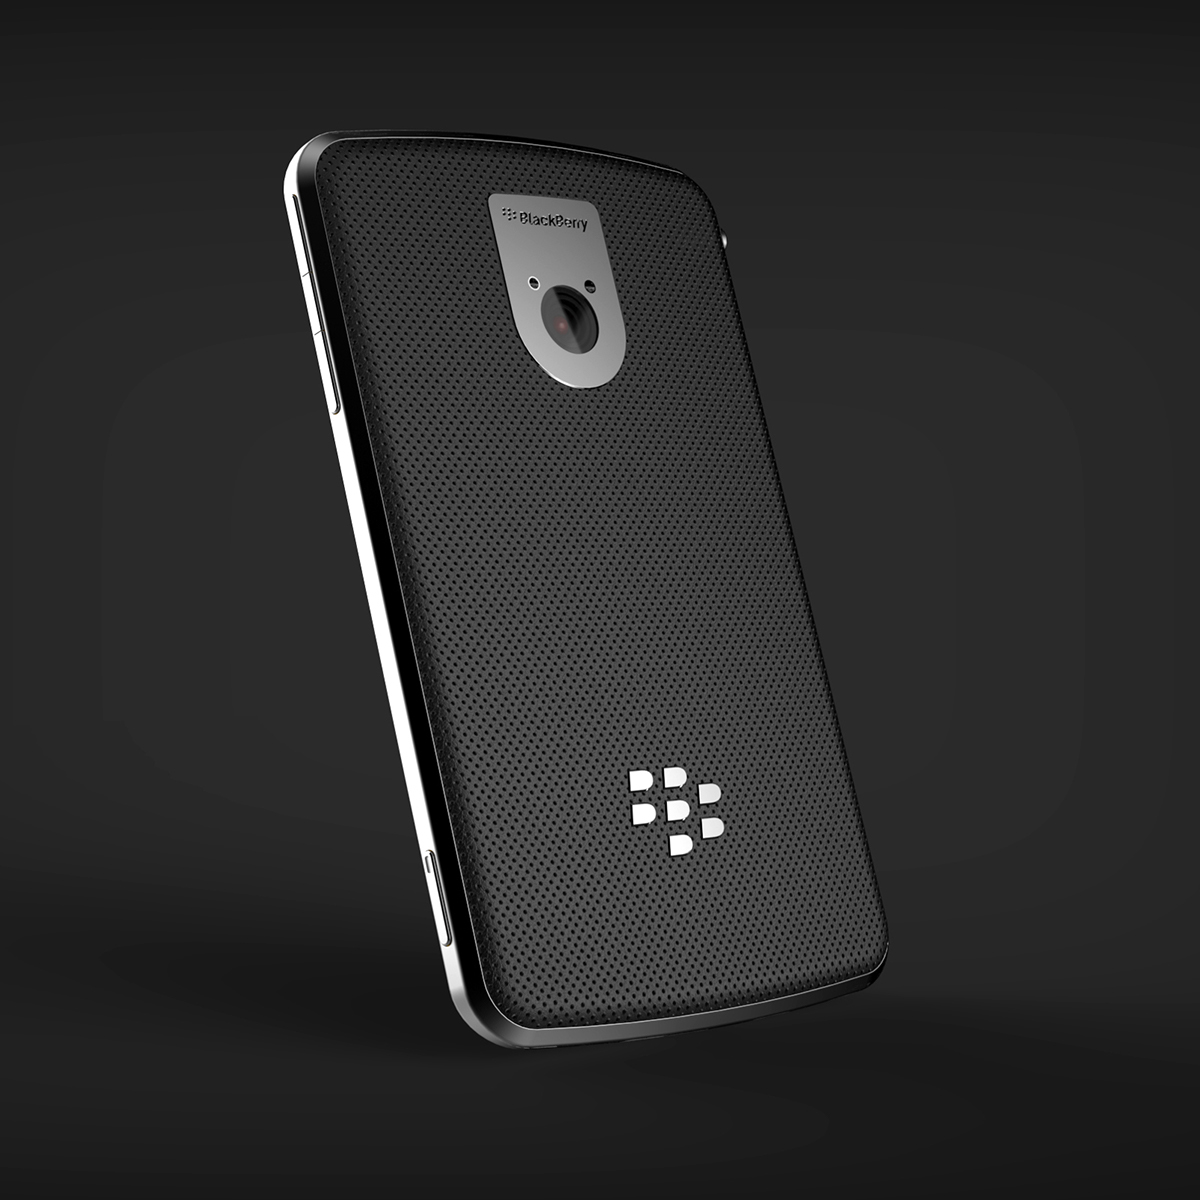 blackberry  michal bonikowski  mobile phone  smartphone  windows phone rim  mindsailors  concept design  mobile design  phone design  Industrial Design  product design